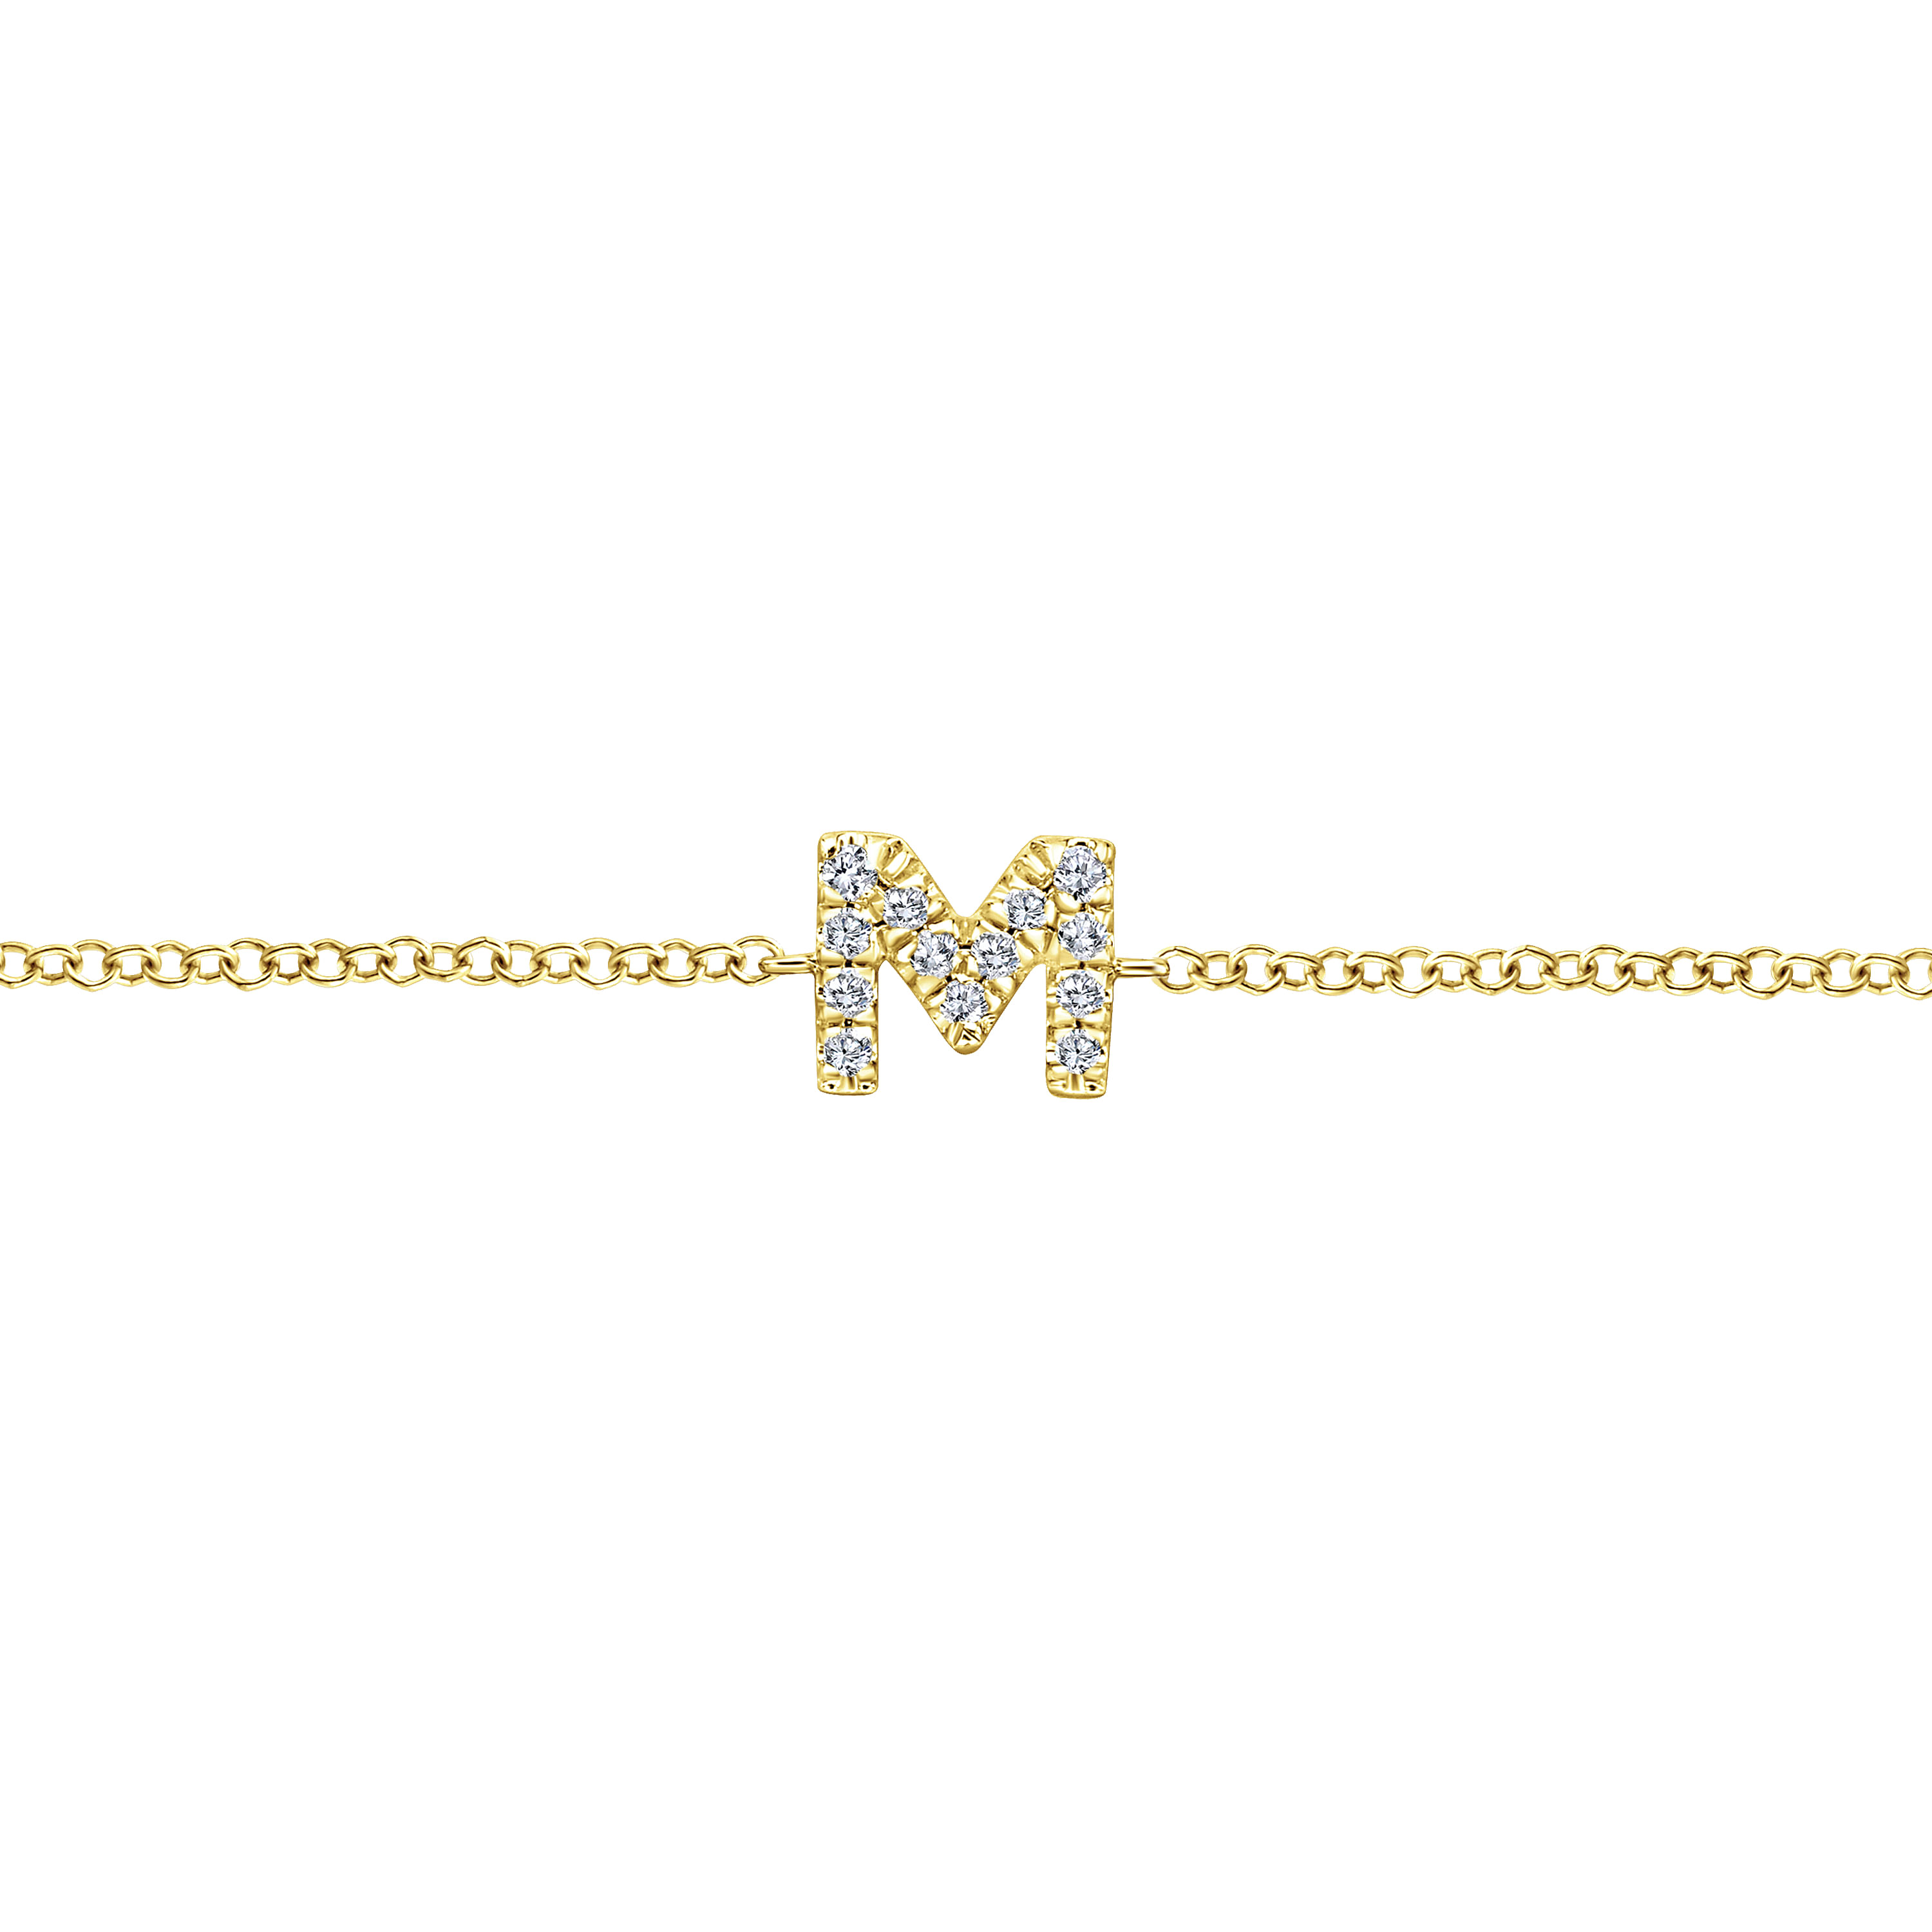 14K Yellow Gold Chain Bracelet with M Diamond Initial